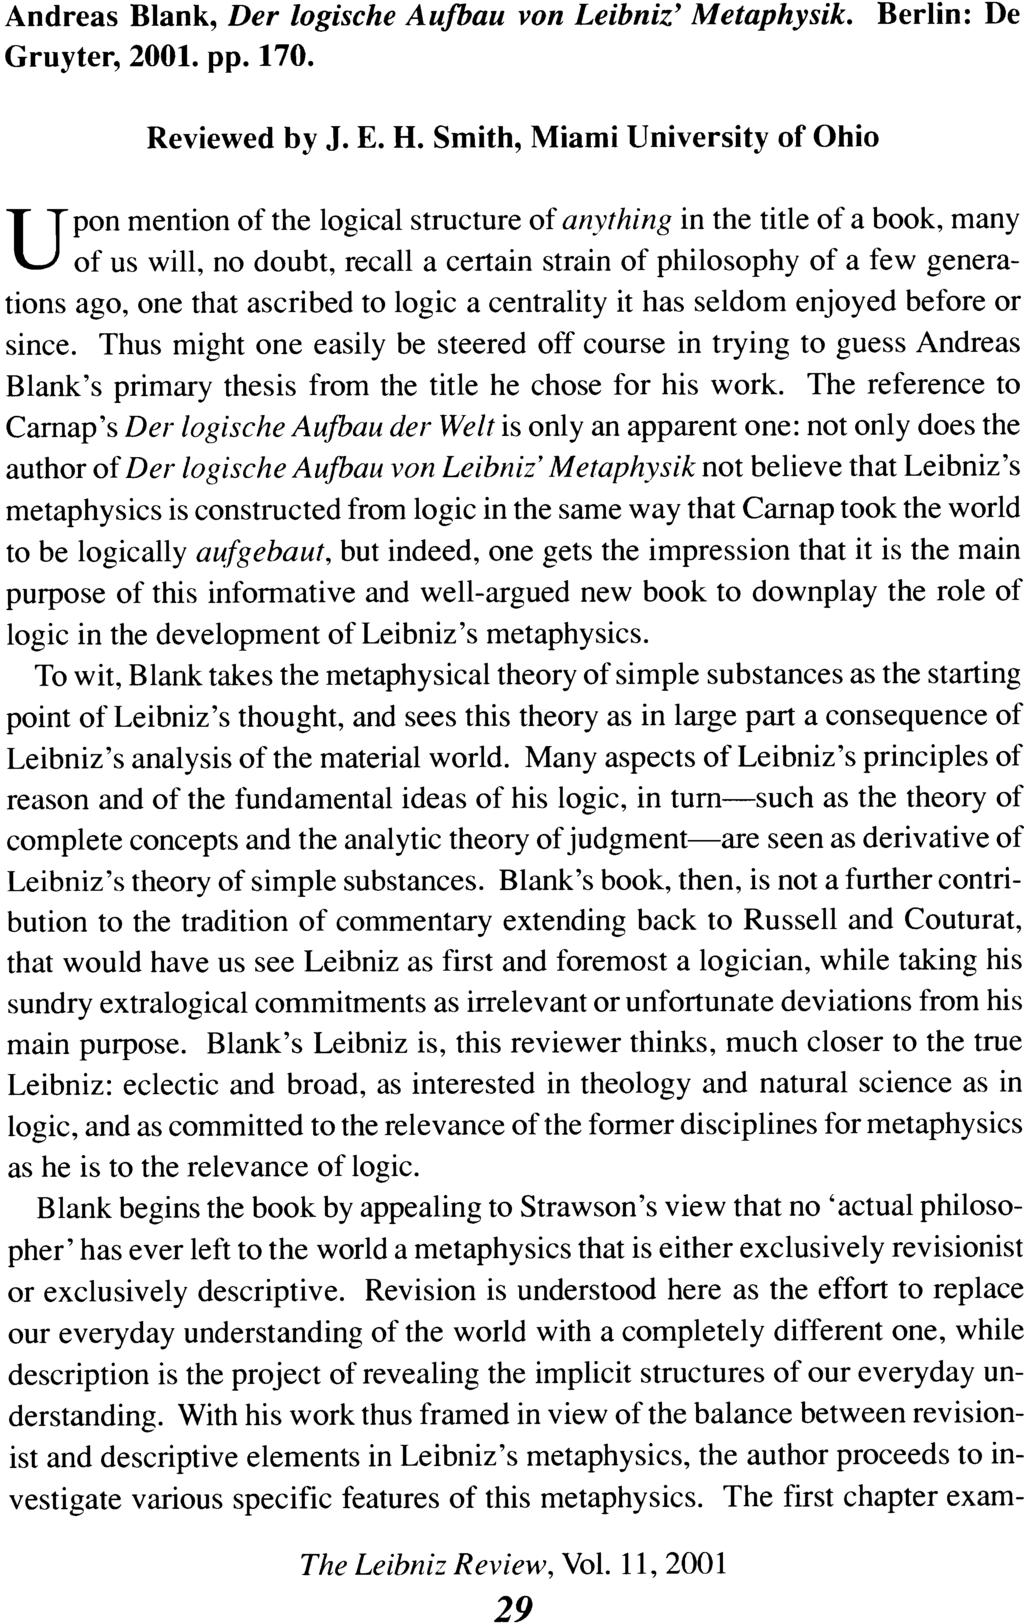 Andreas Blank, Der logische Aufbau von Leibniz' Metaphysik. Berlin: De Gruyter, 2001. pp. 170. Reviewed by J. E. H.